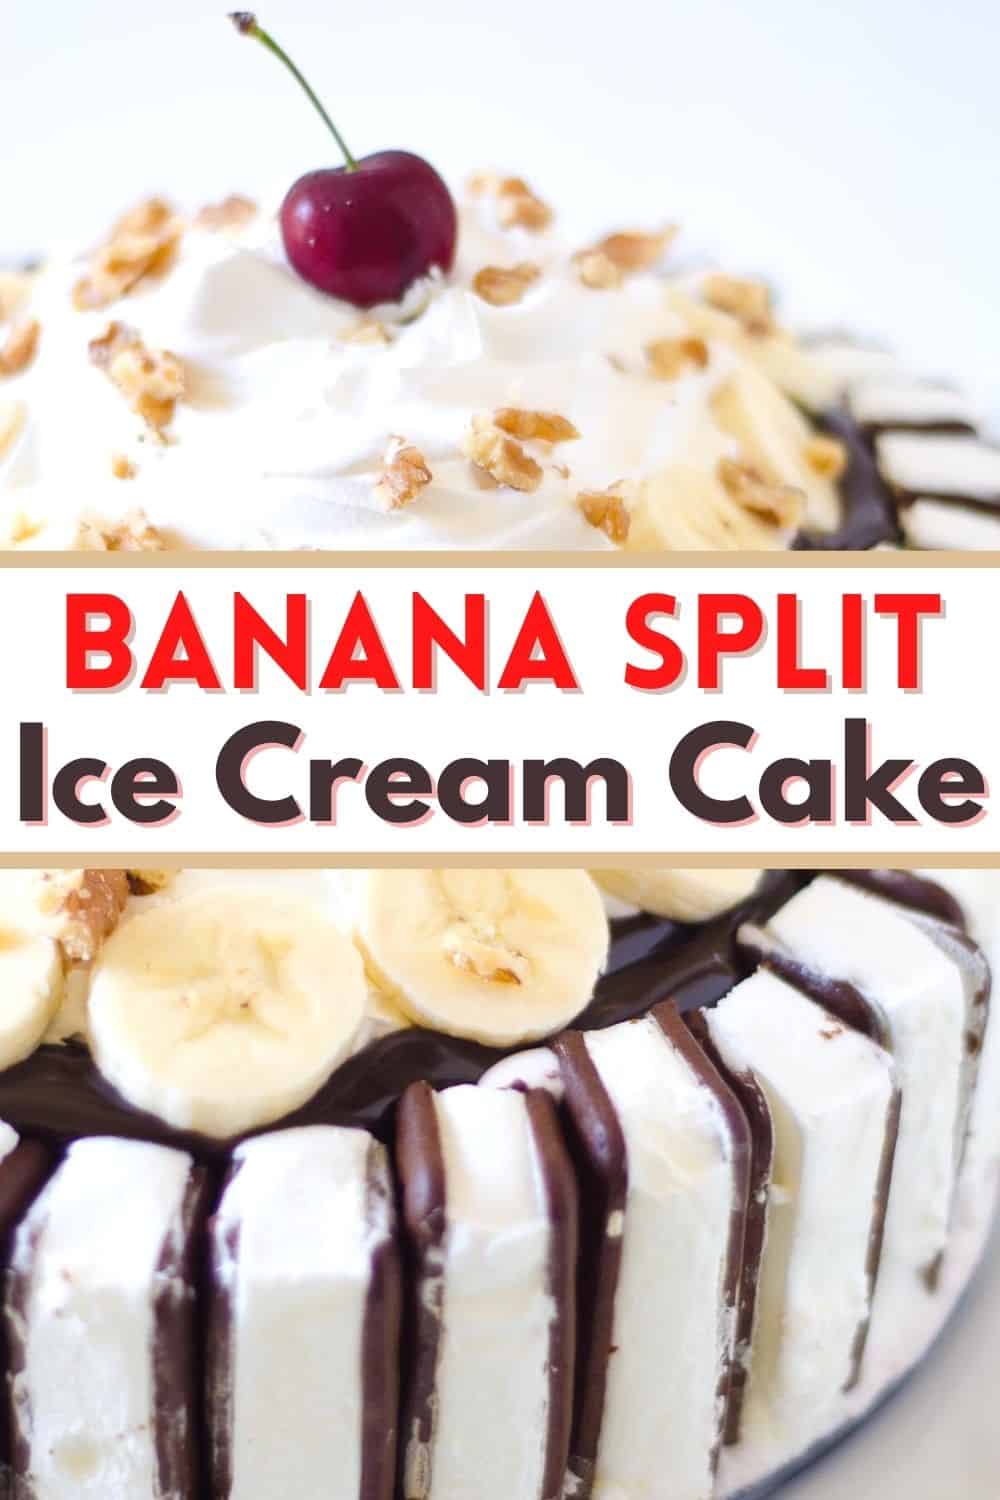 All-American Banana Split Recipe: How to Make It